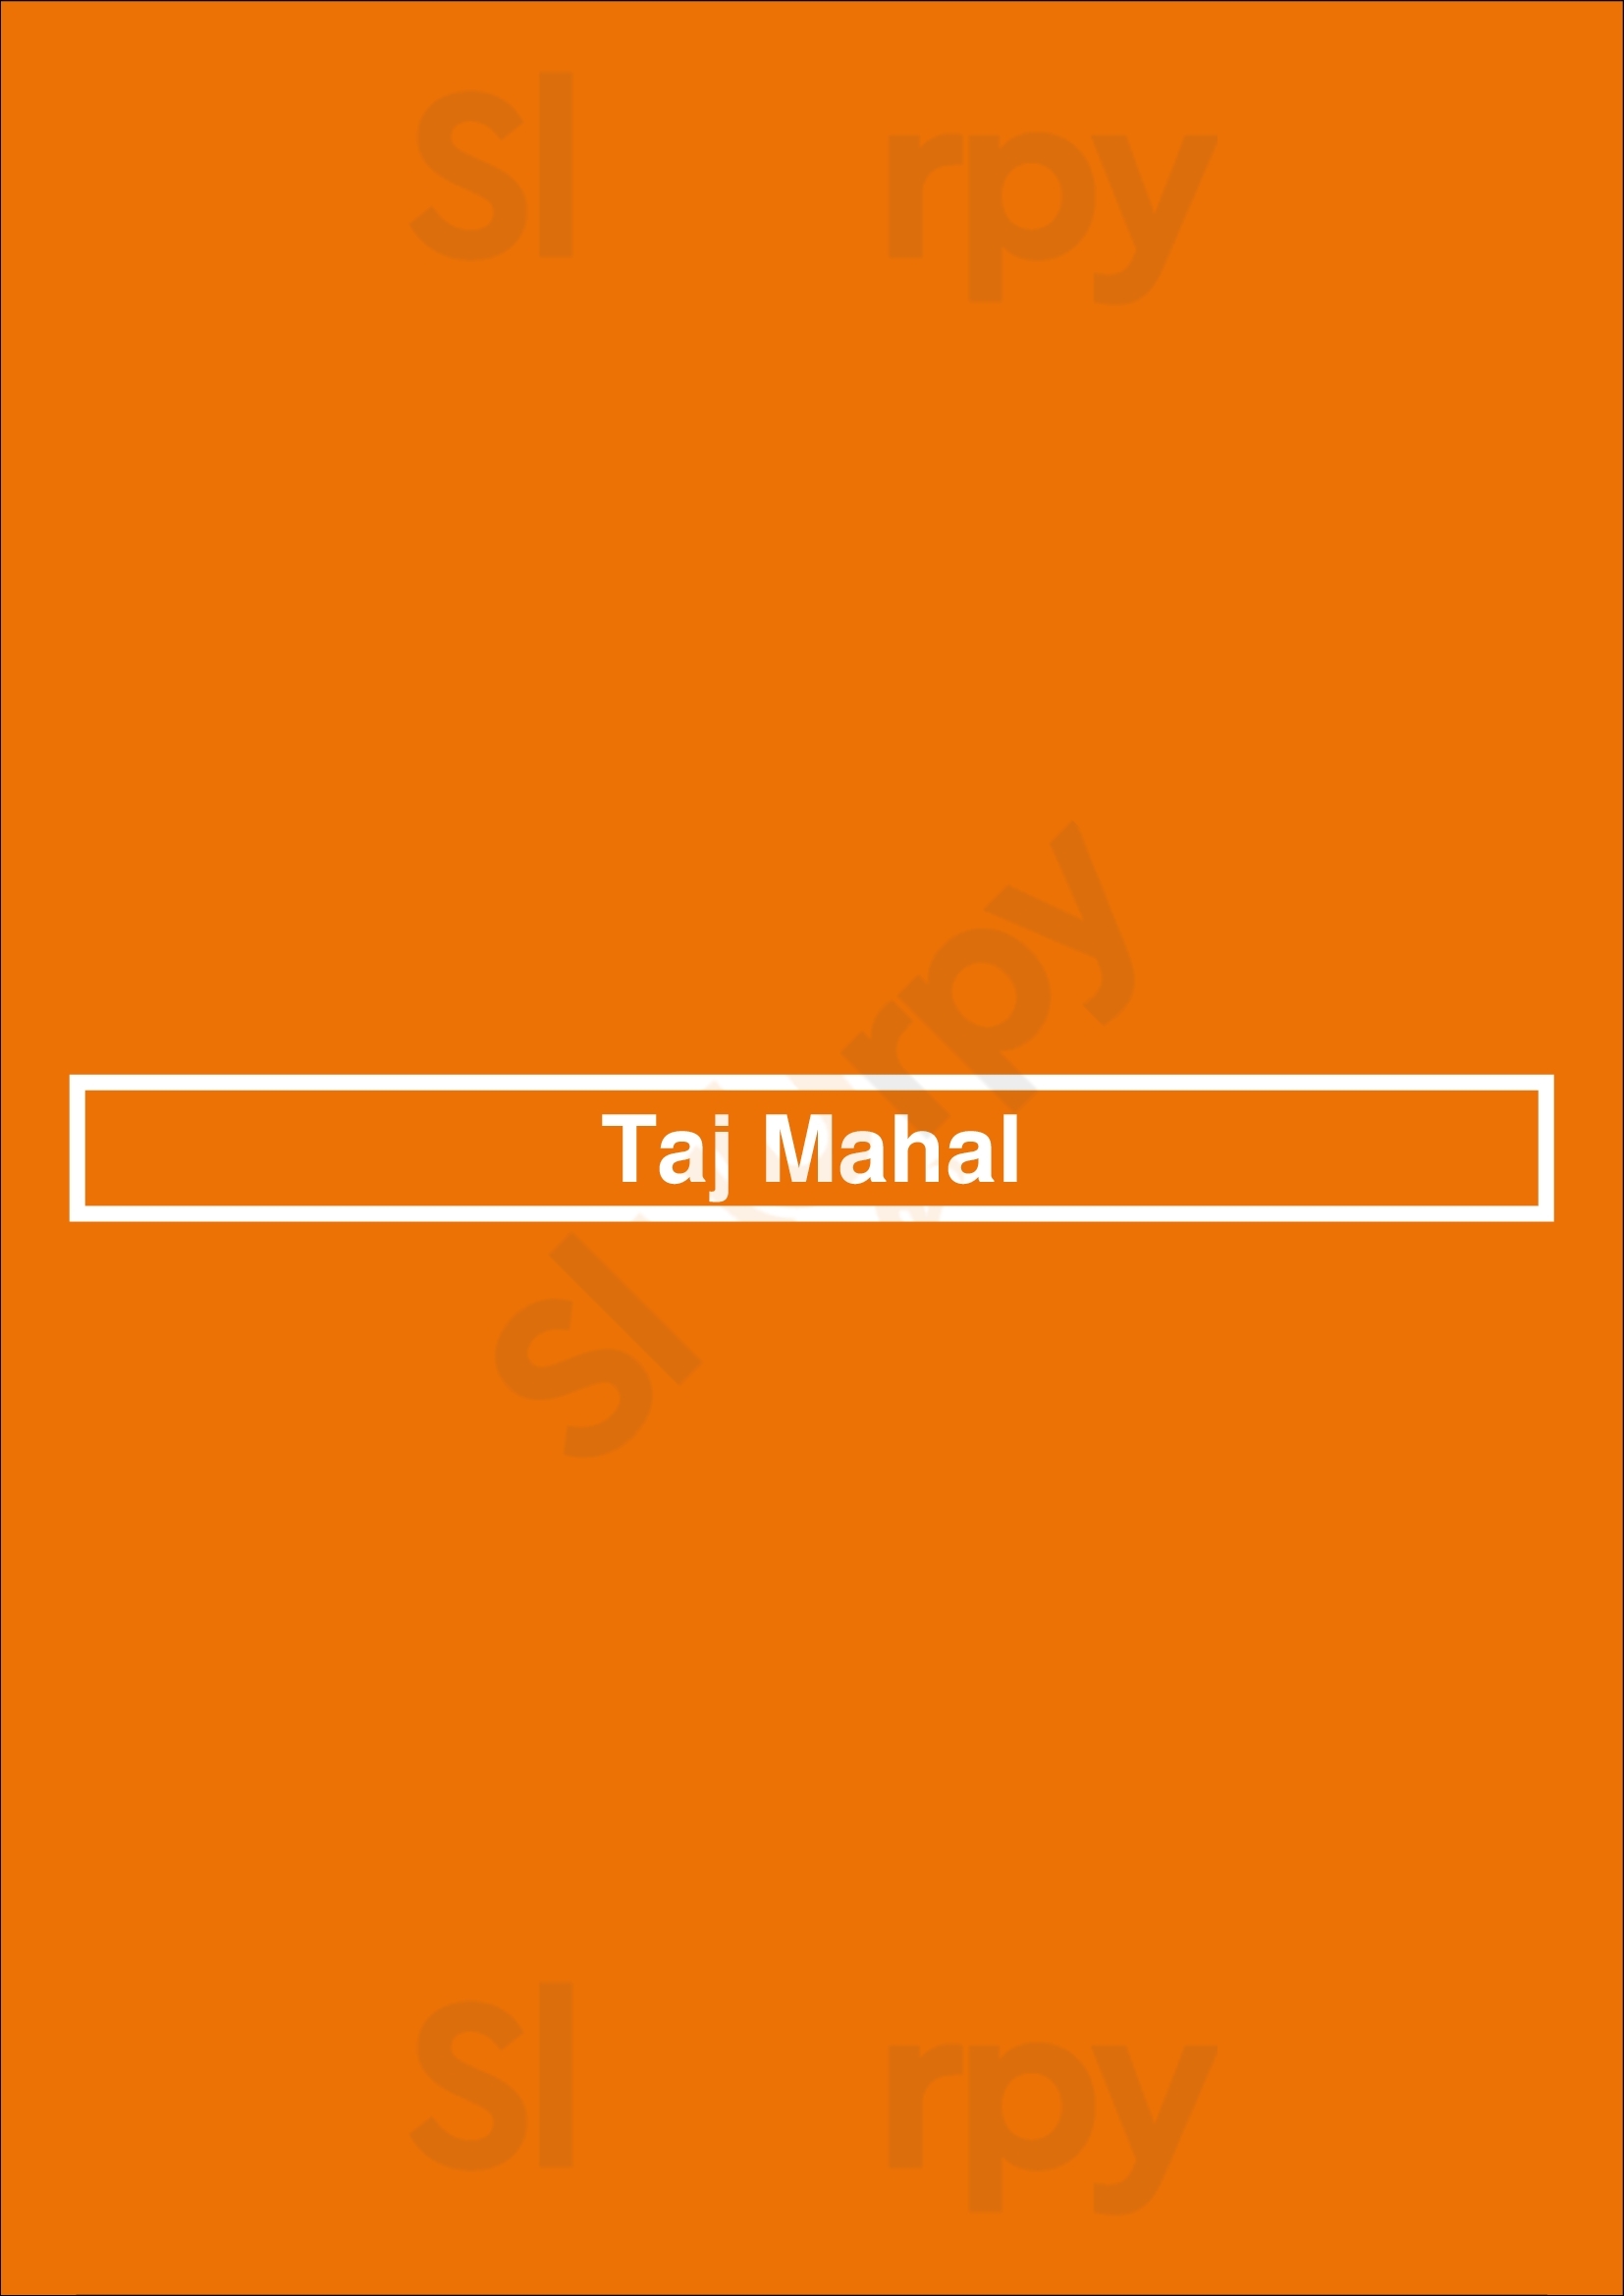 Taj Mahal Breda Menu - 1